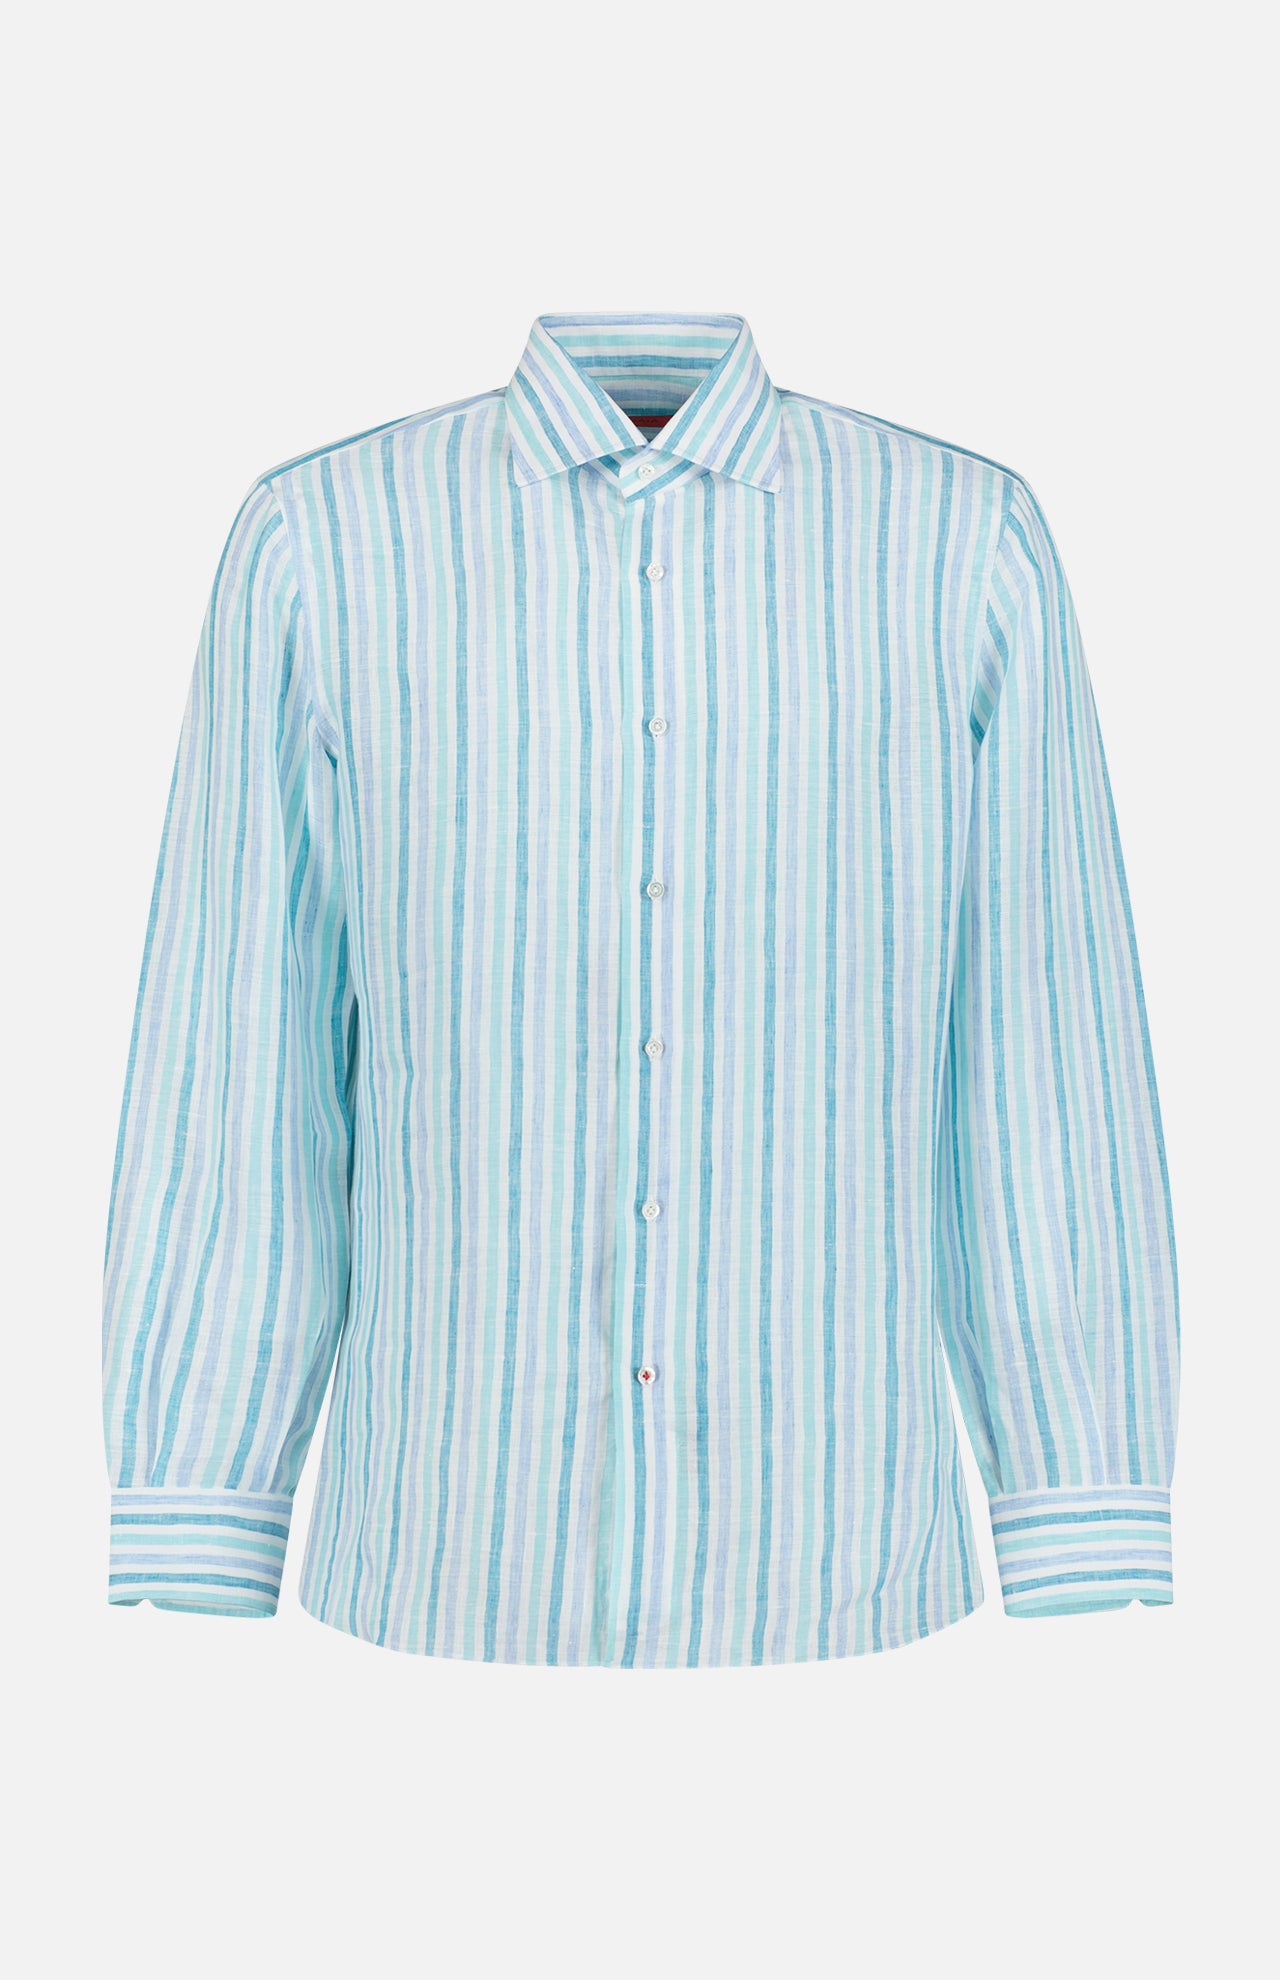 Superlino Summer Stripes Shirt (7363658317939)